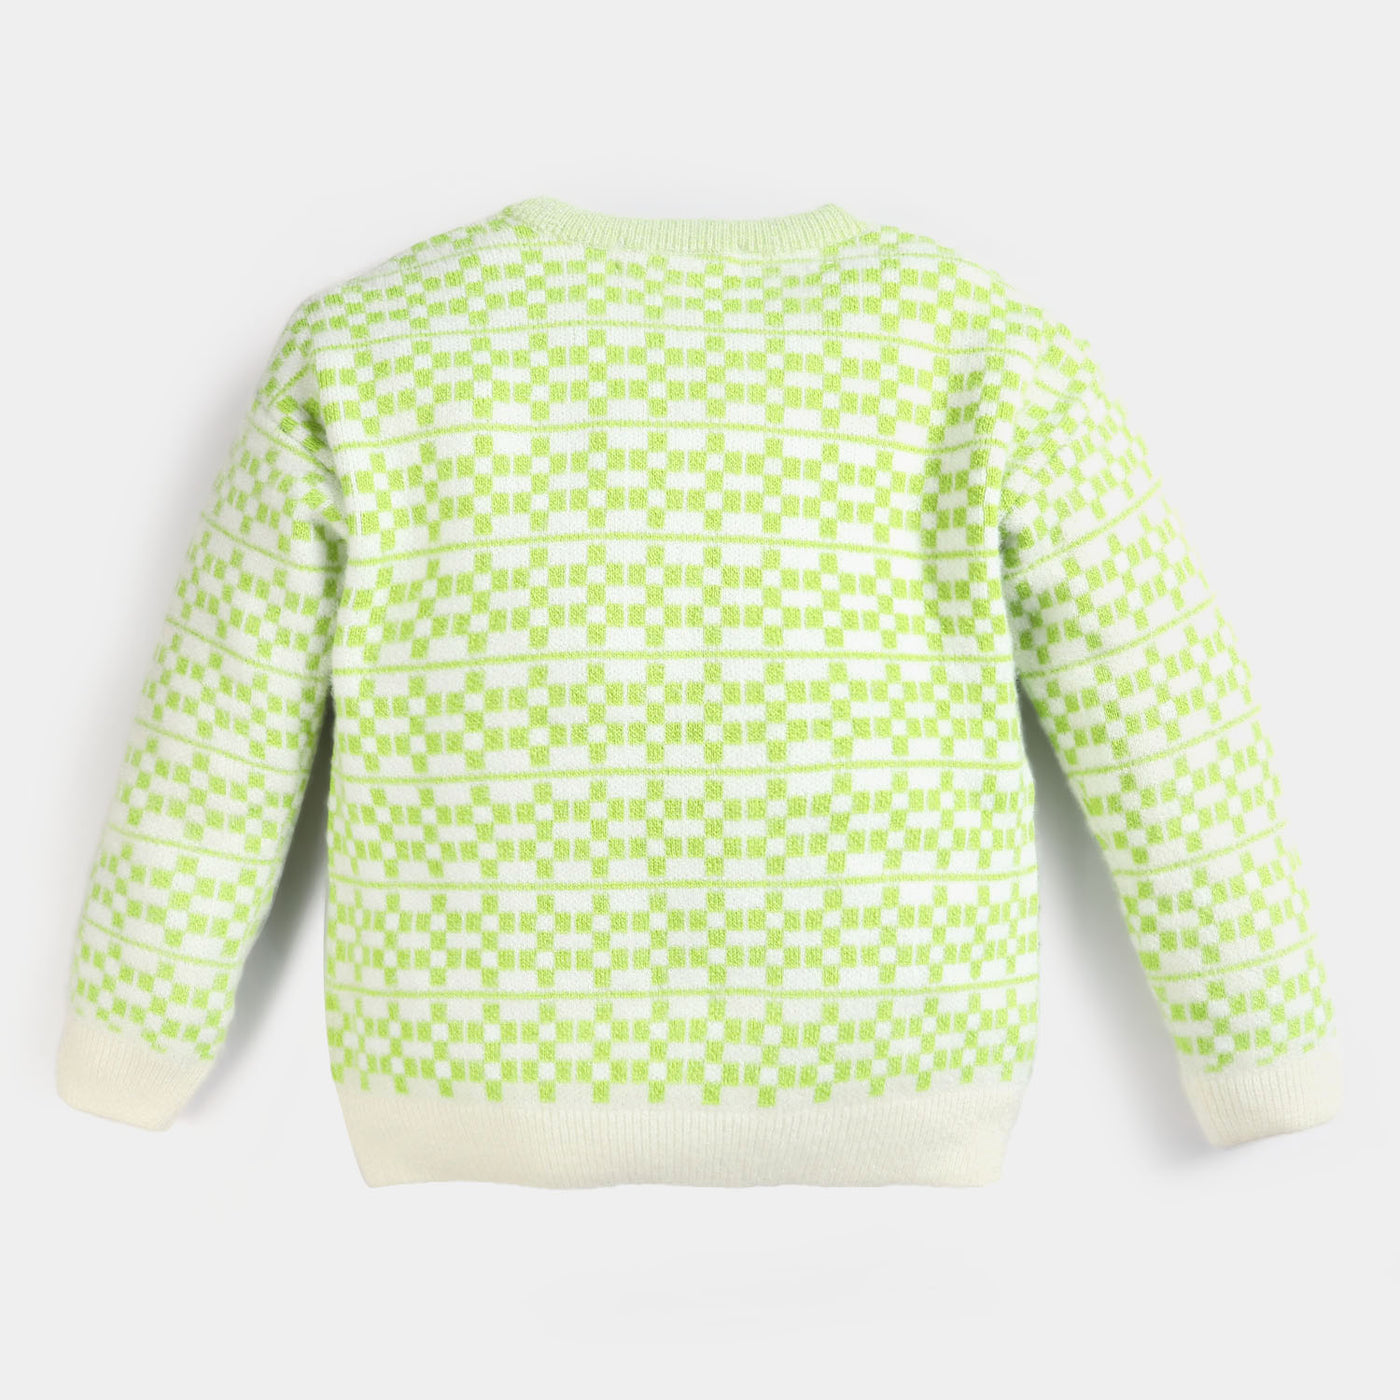 Boys Knit Sweater - Green